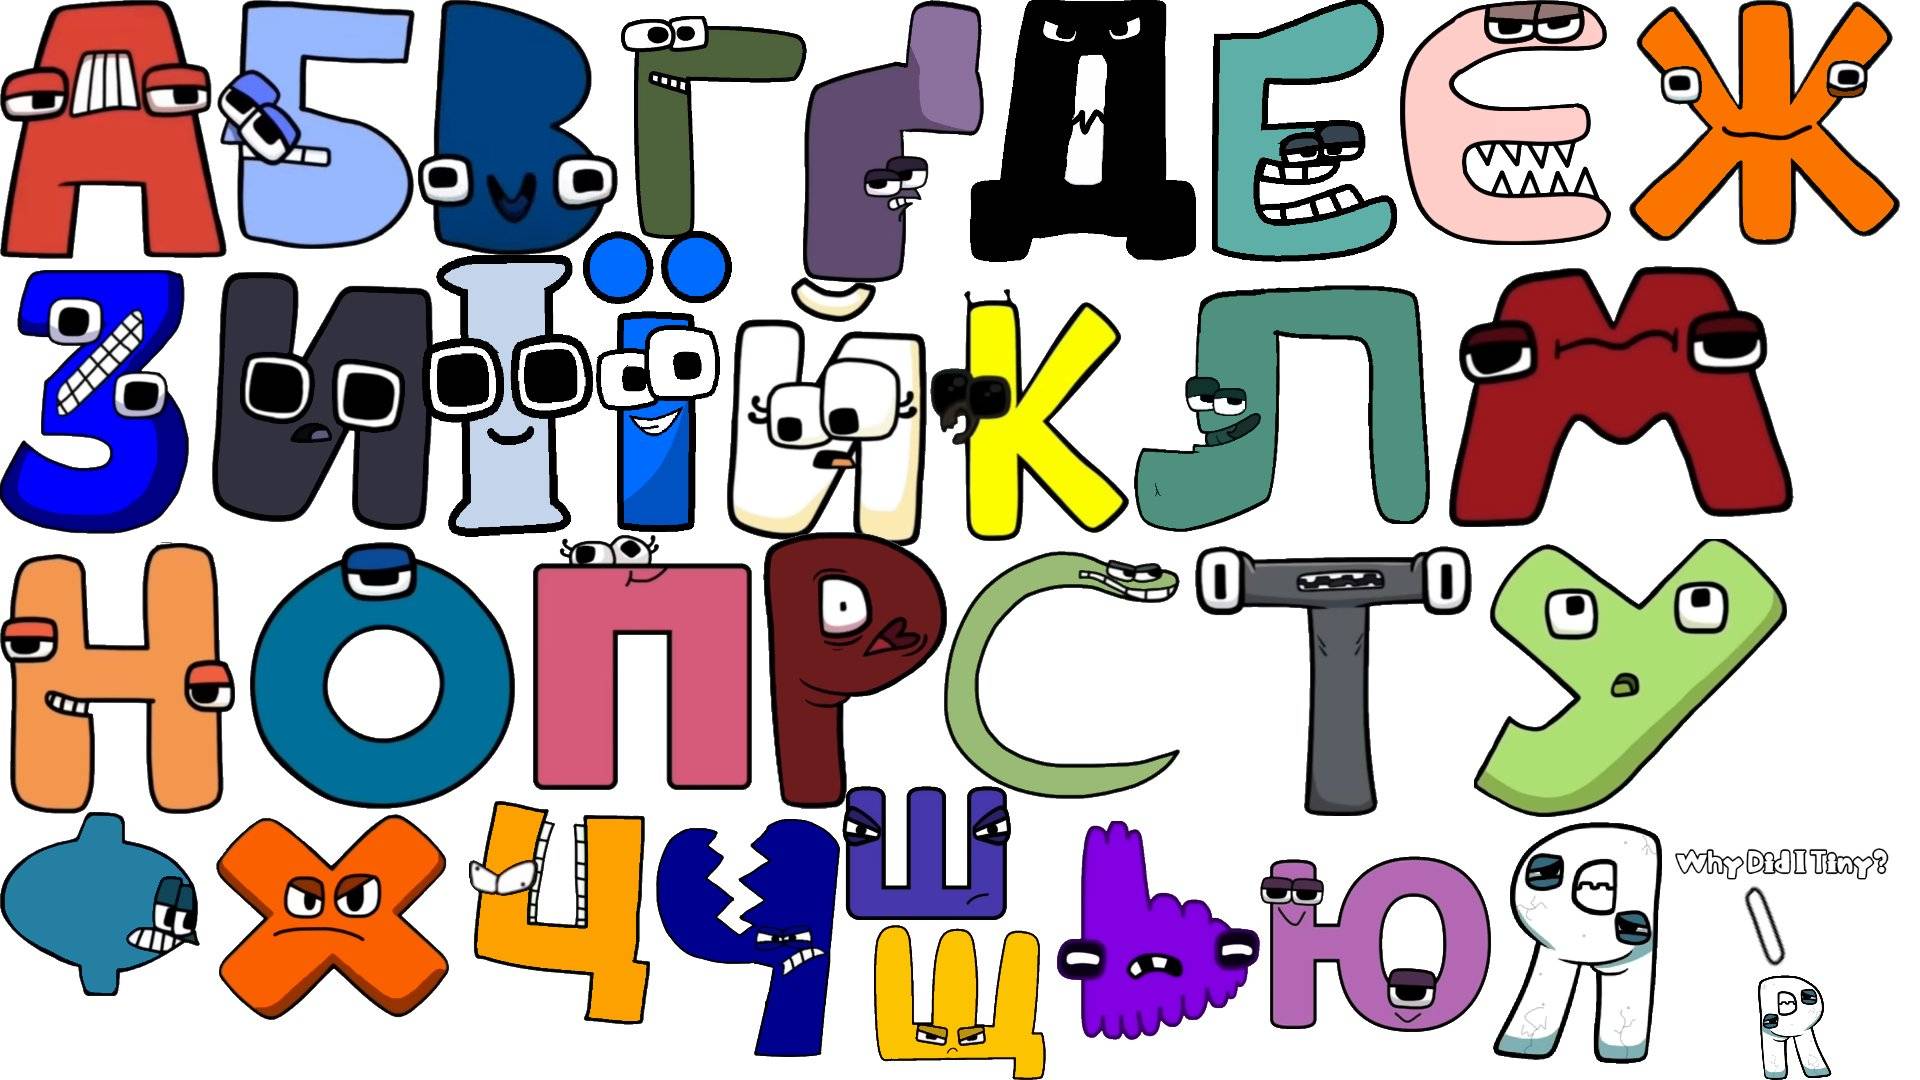 Ukraine Alphabet Lore RELOADED: I 